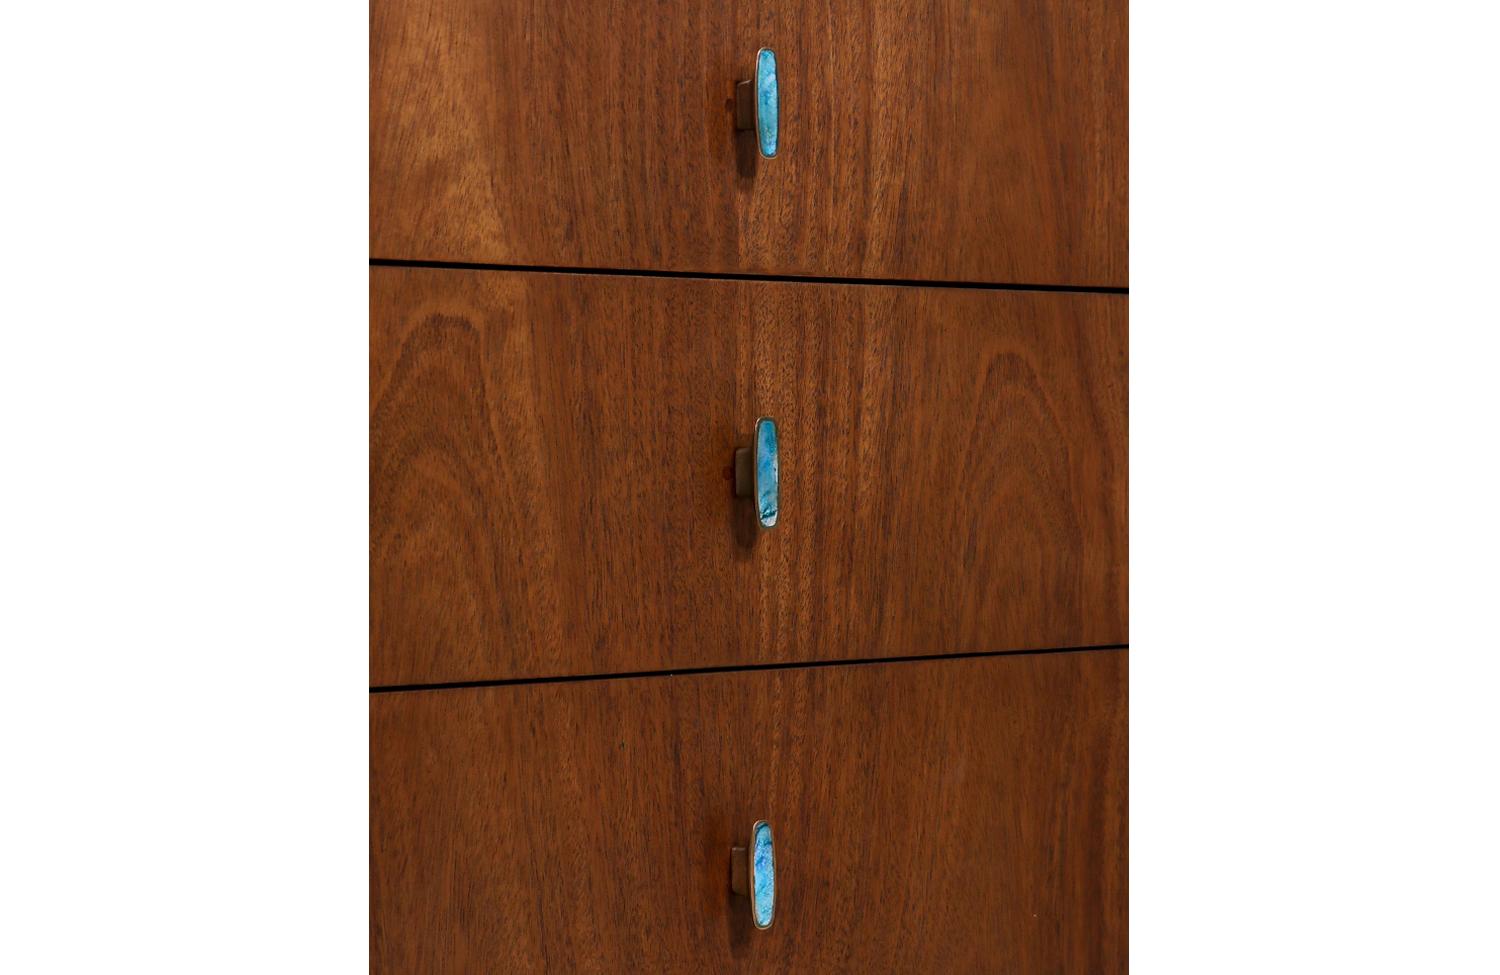 Walnut Mid-Century Modern Dresser with Turquoise Enameled Inlaid Pulls